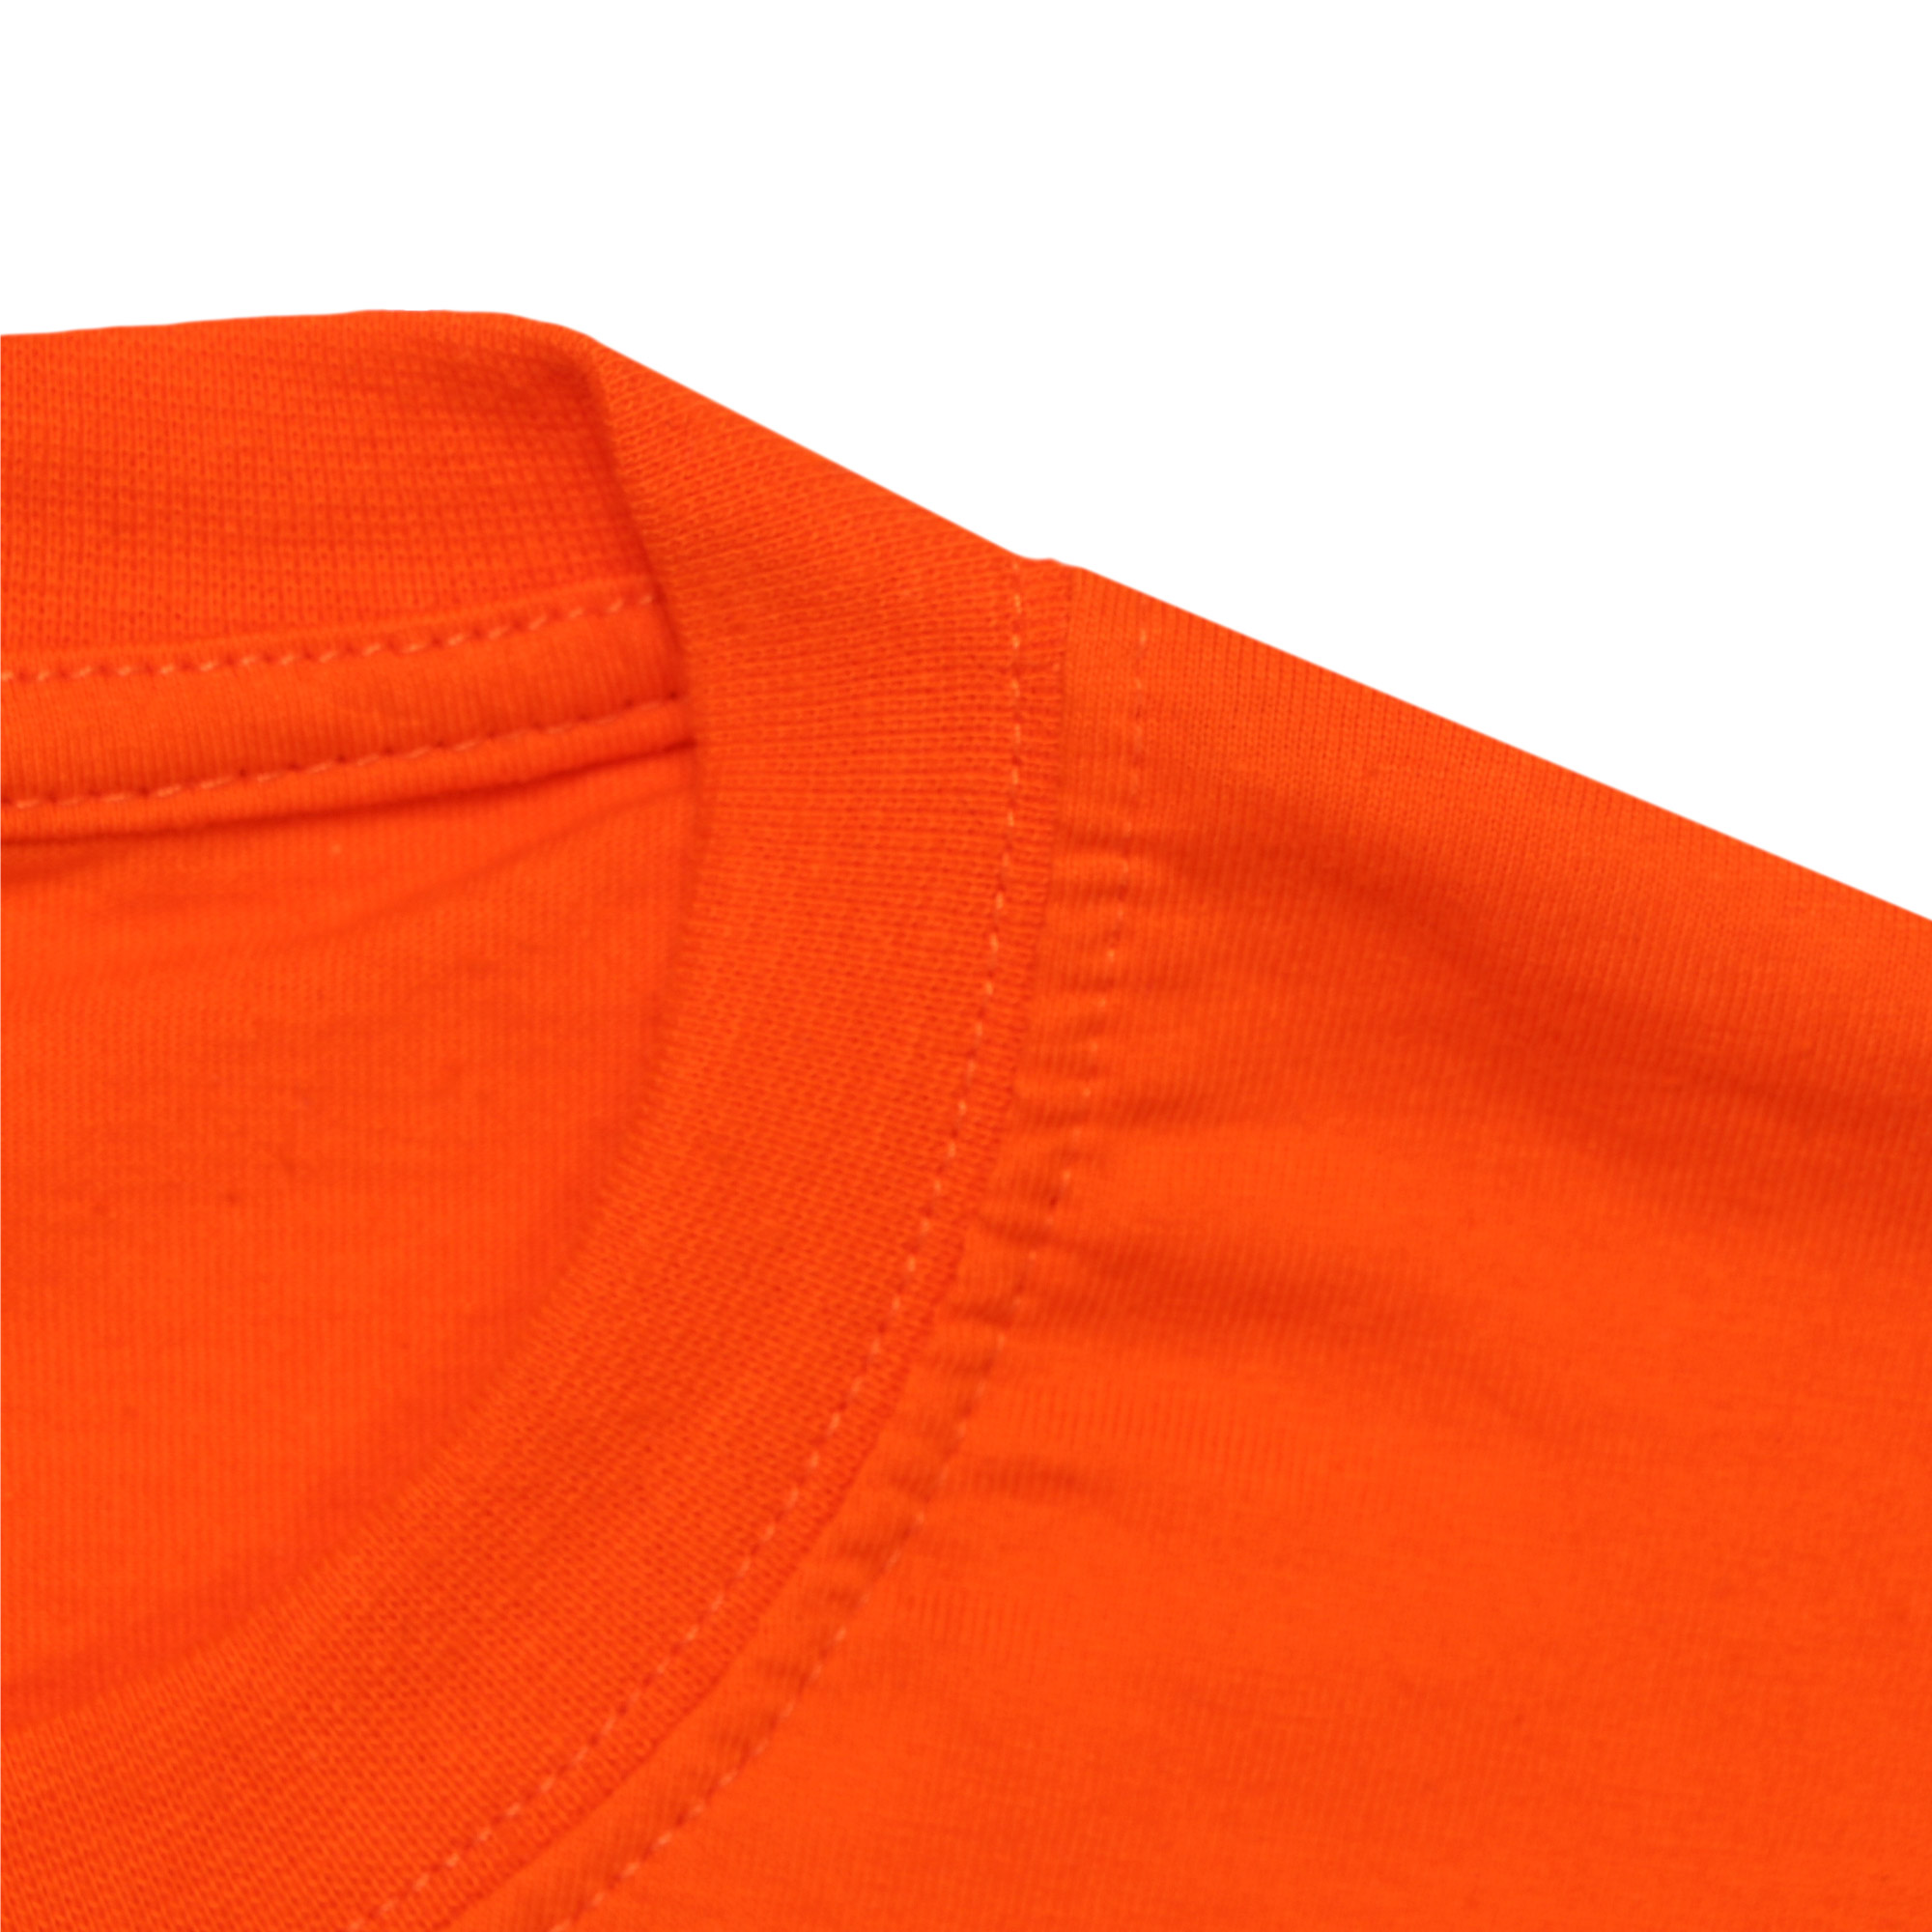 Футболка мужская M-1 Promo оранжевая с коротким рукавом M, цвет оранжевый, размер M - фото 2